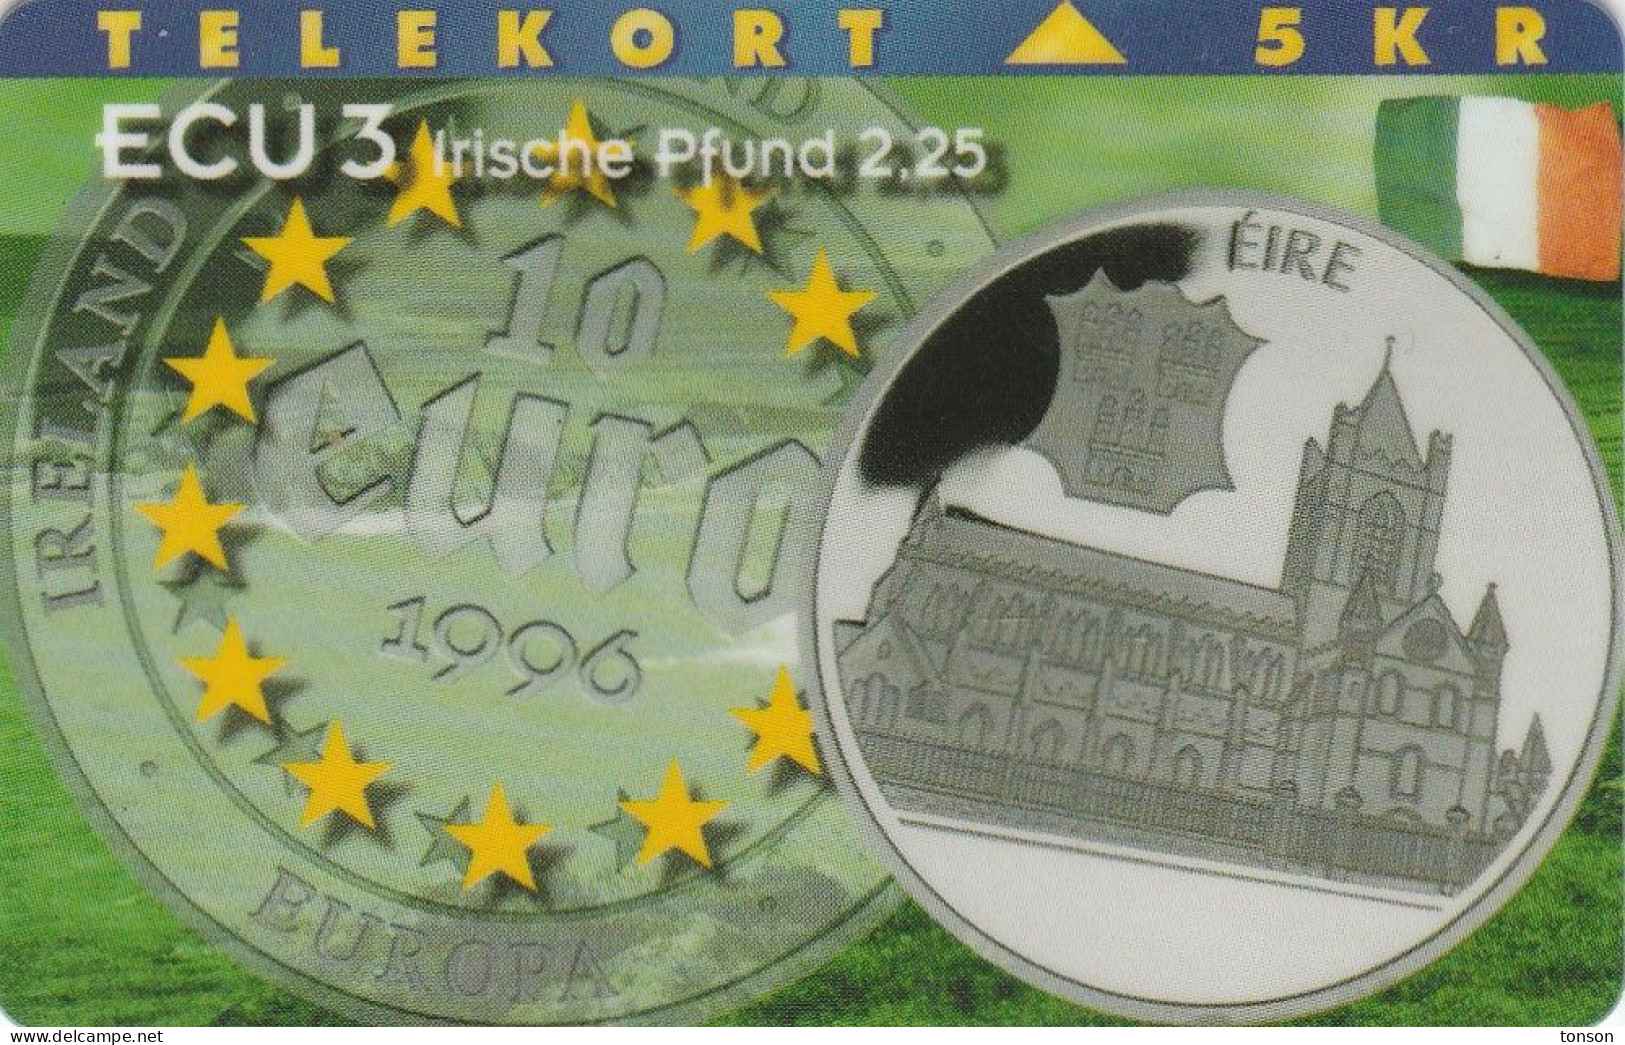 Denmark, P 098, Ecu - Ireland, Flag, Mint Only 1000 Issued, 2 Scans. - Denmark